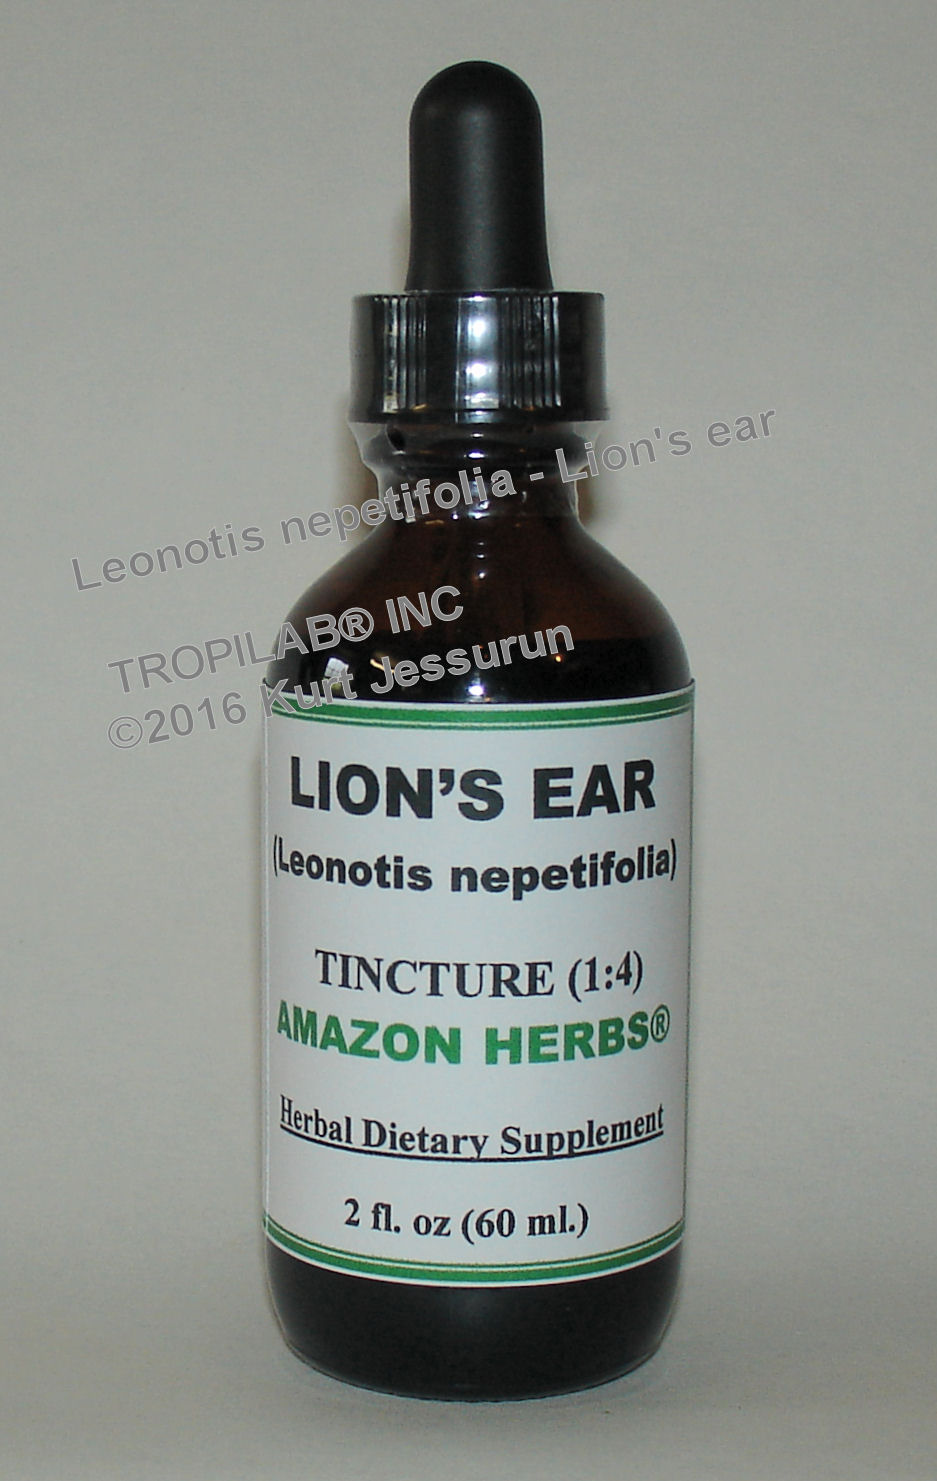 Leonotis nepetifolia - Lion's ear tincture